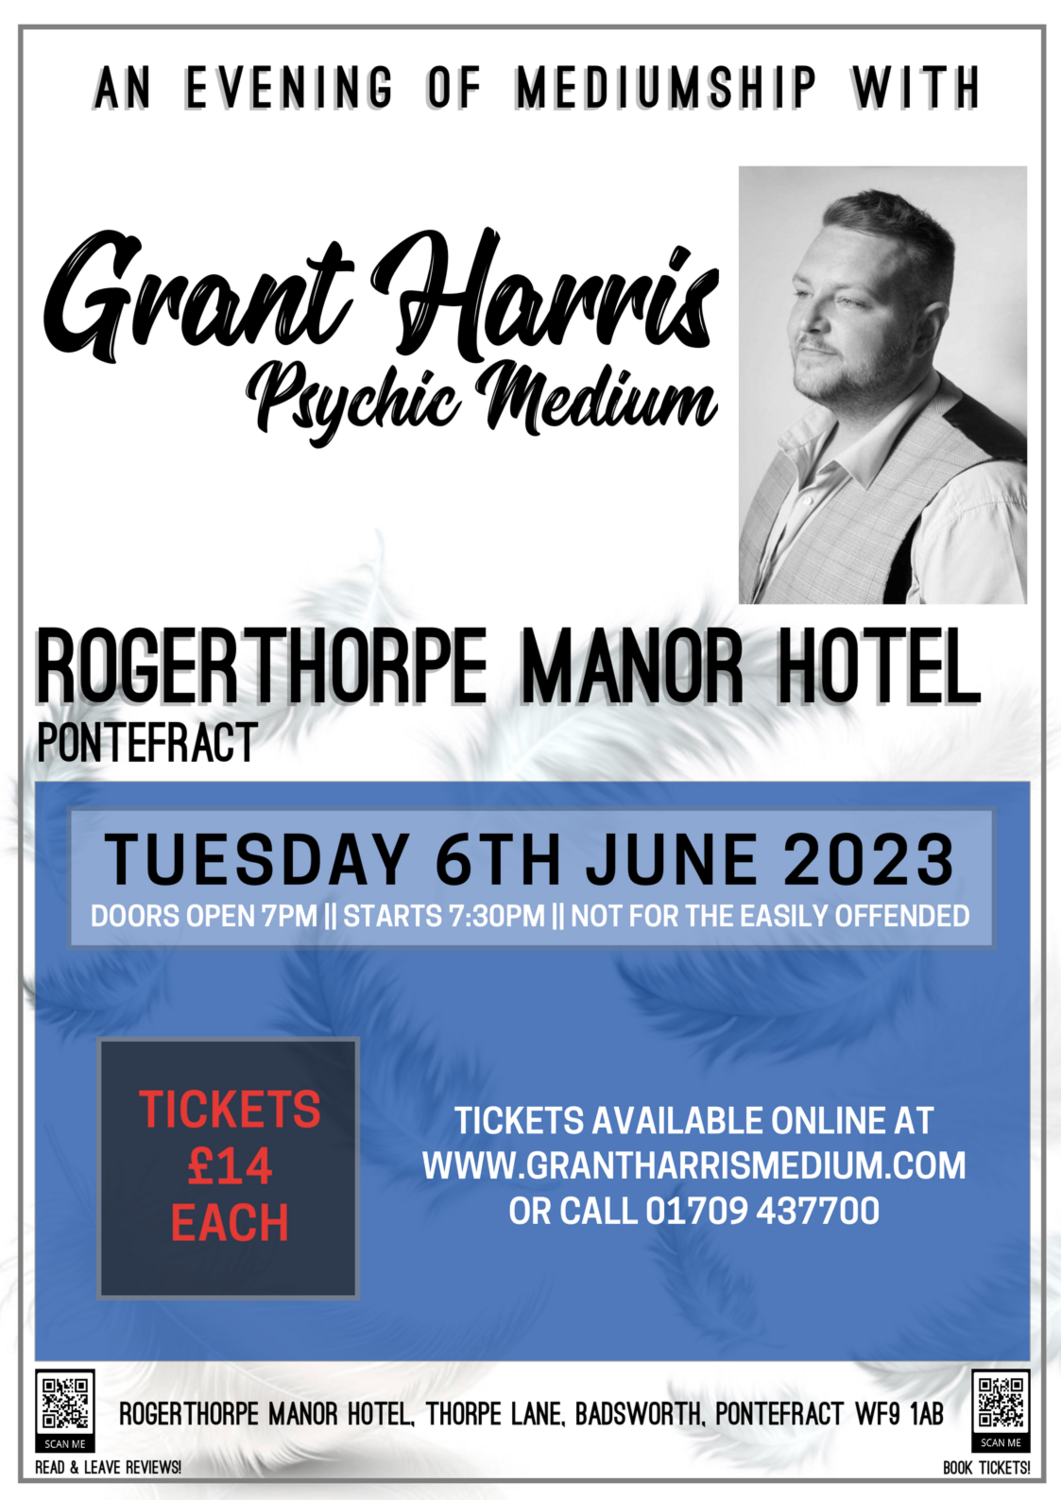 Rogerthorpe Manor Hotel, Pontefract, Tuesday 6th June 2023